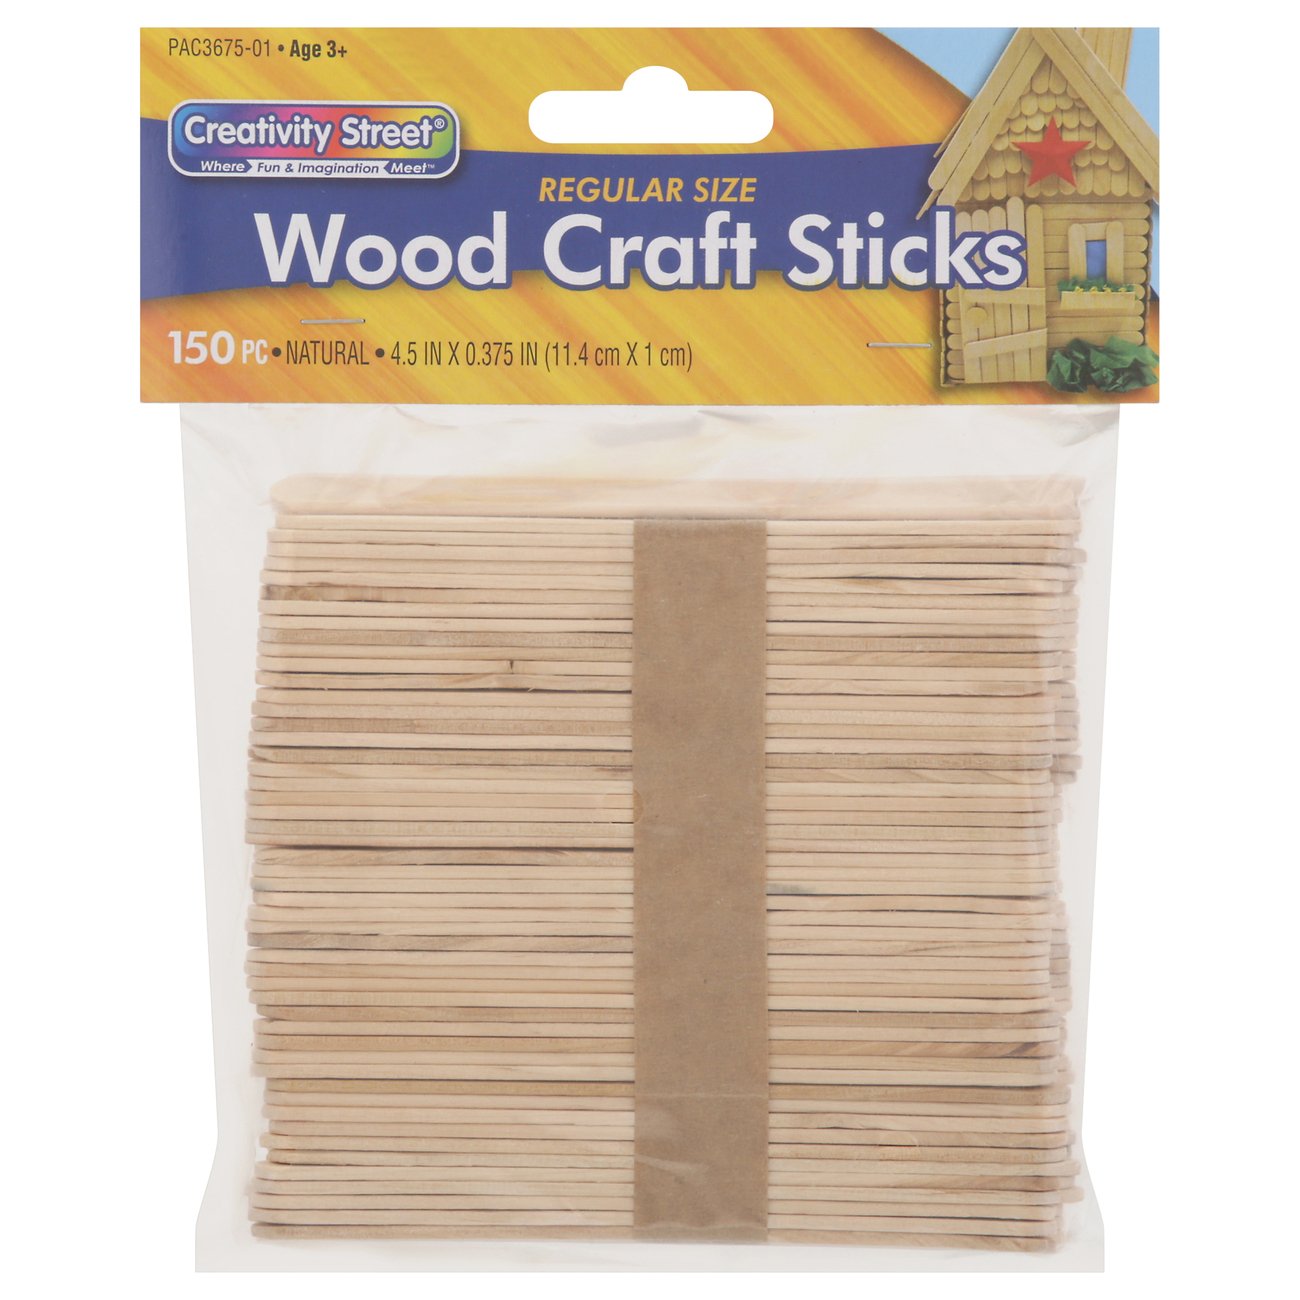 Creativity Street Regular Size Wood Craft Sticks